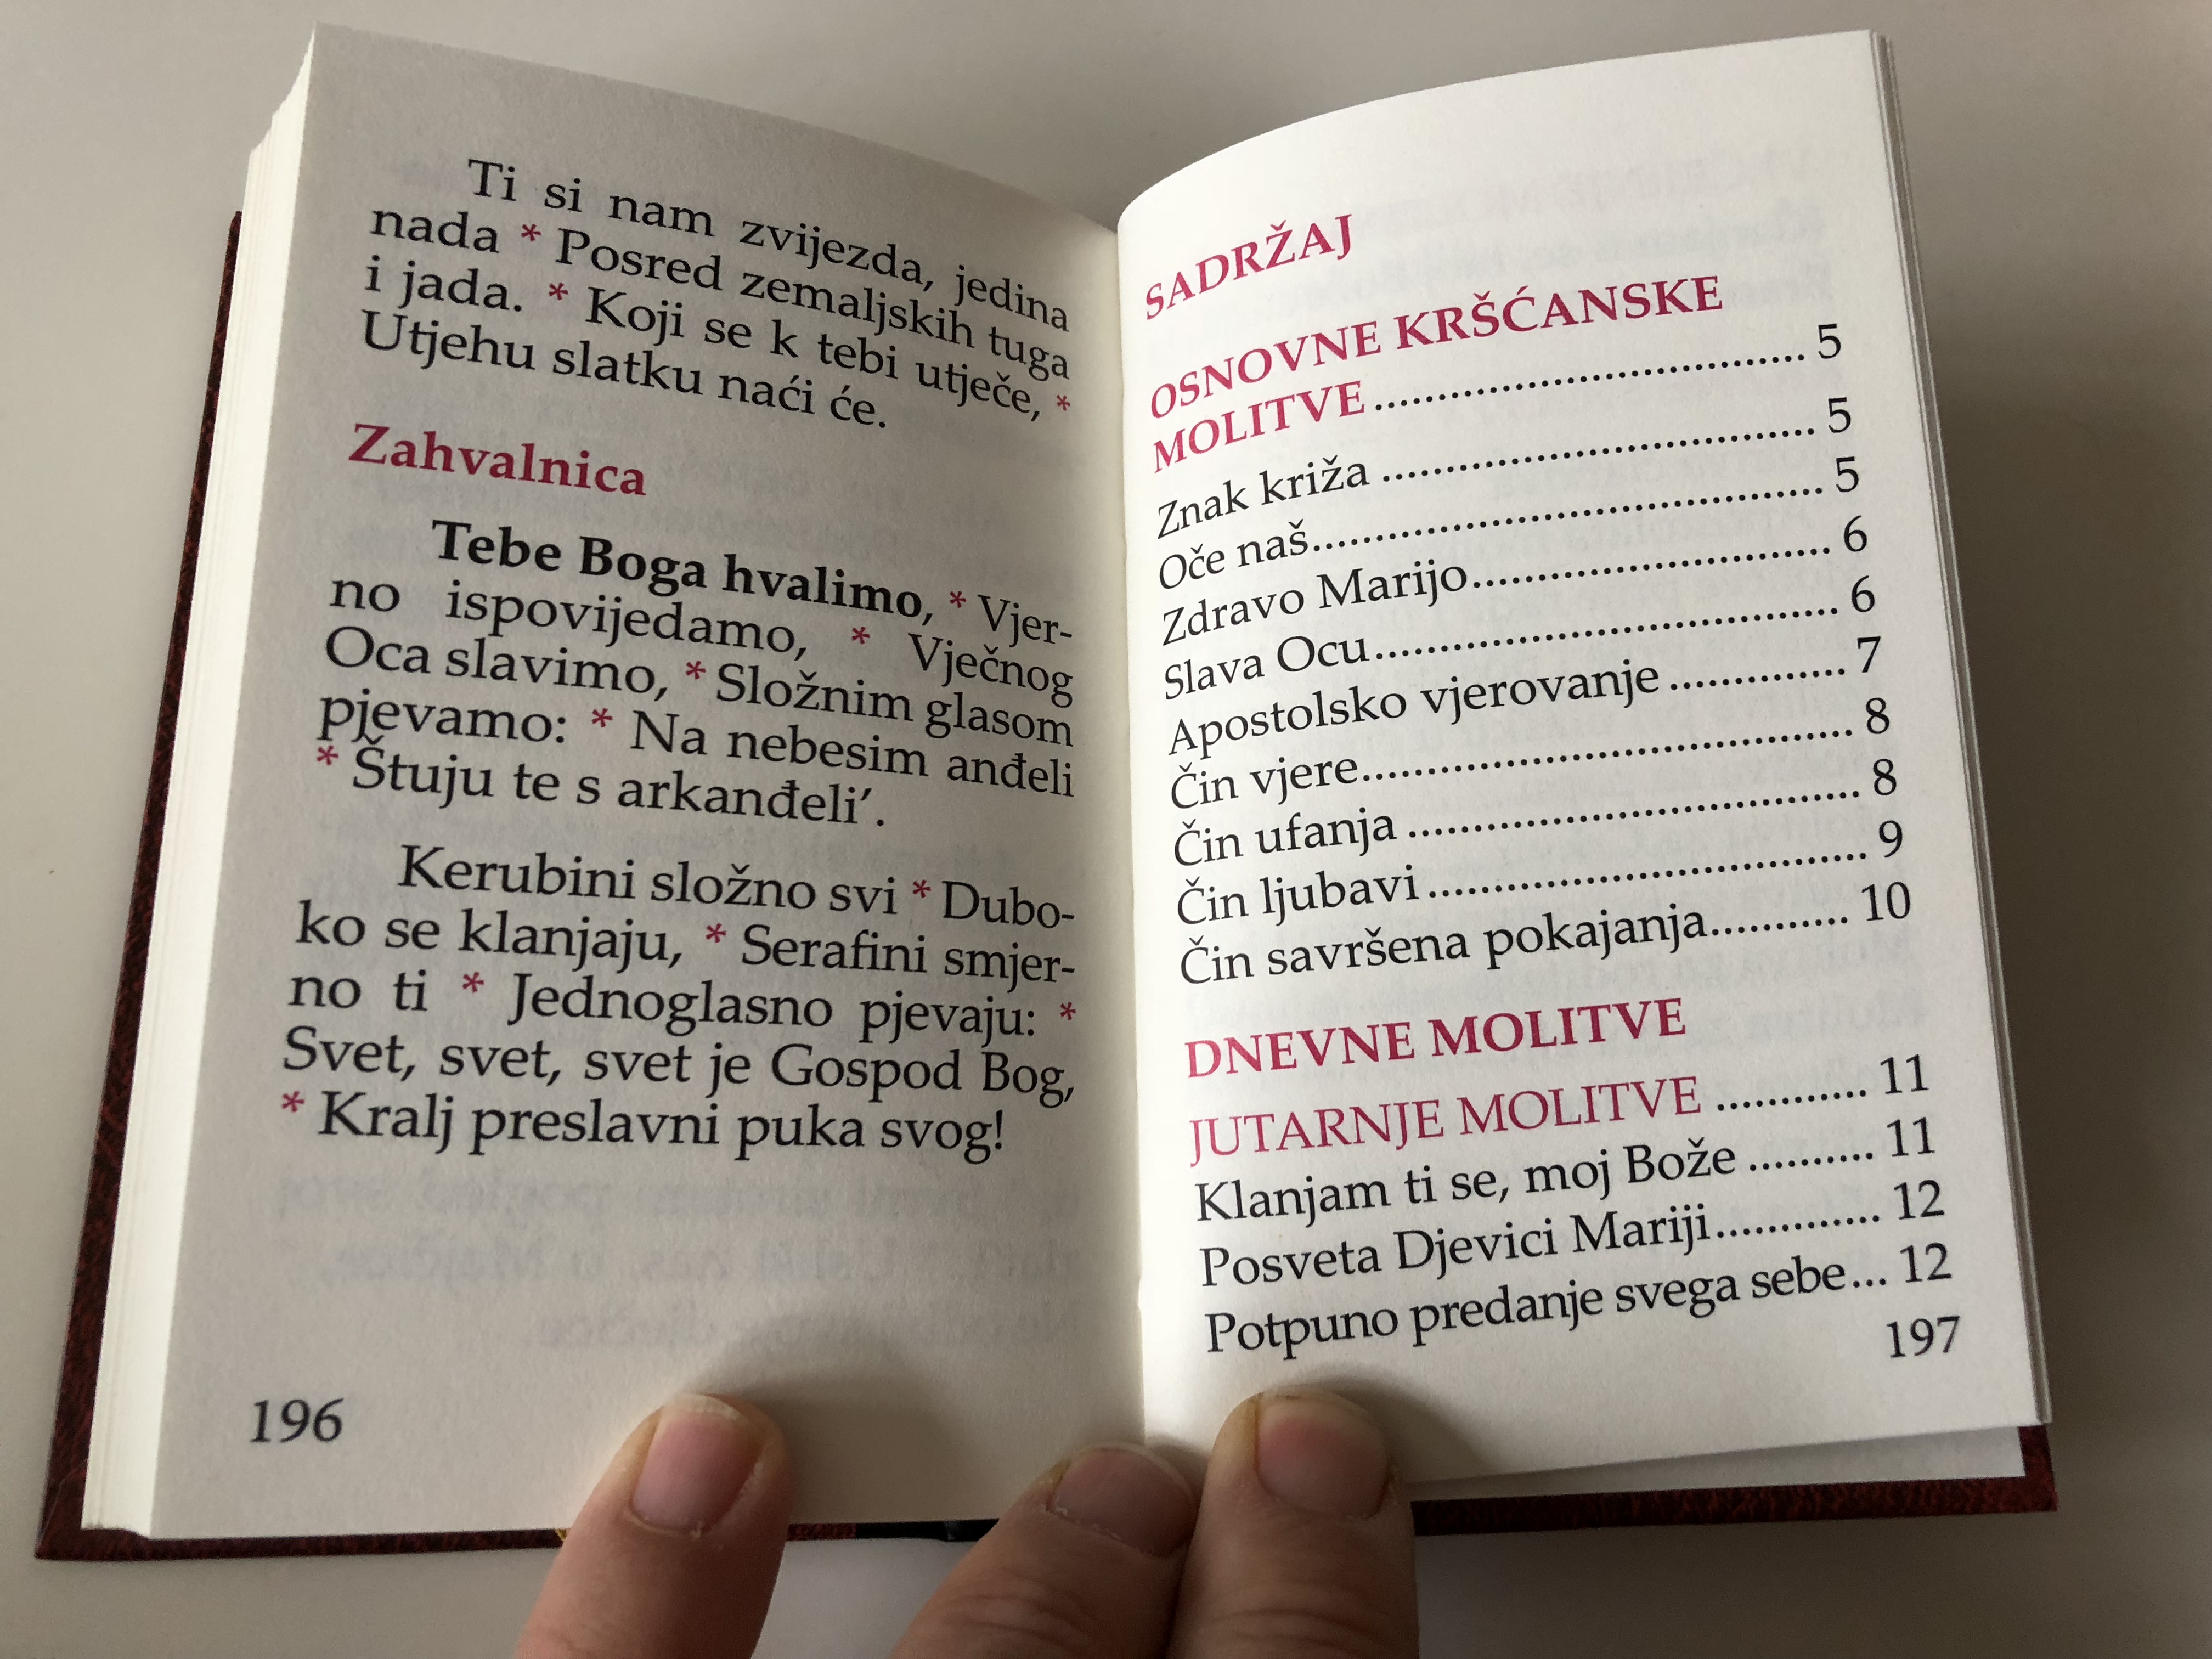 croatian-small-catholic-prayer-book-11th-edition-9-.jpg